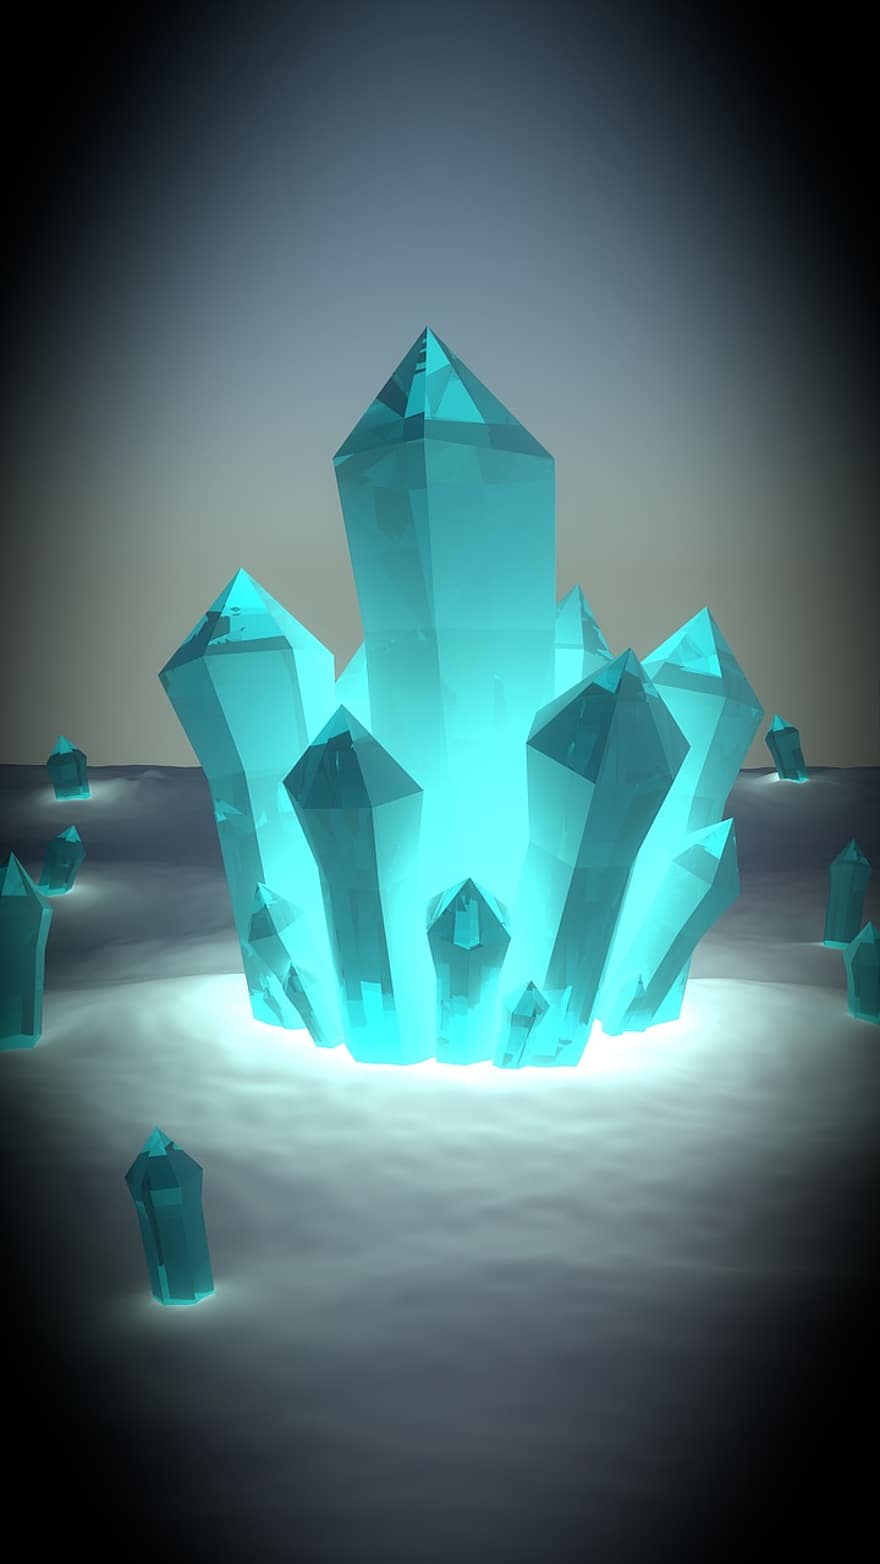 cristall de gel, cristall, fantasia, màgia, hivern, blau